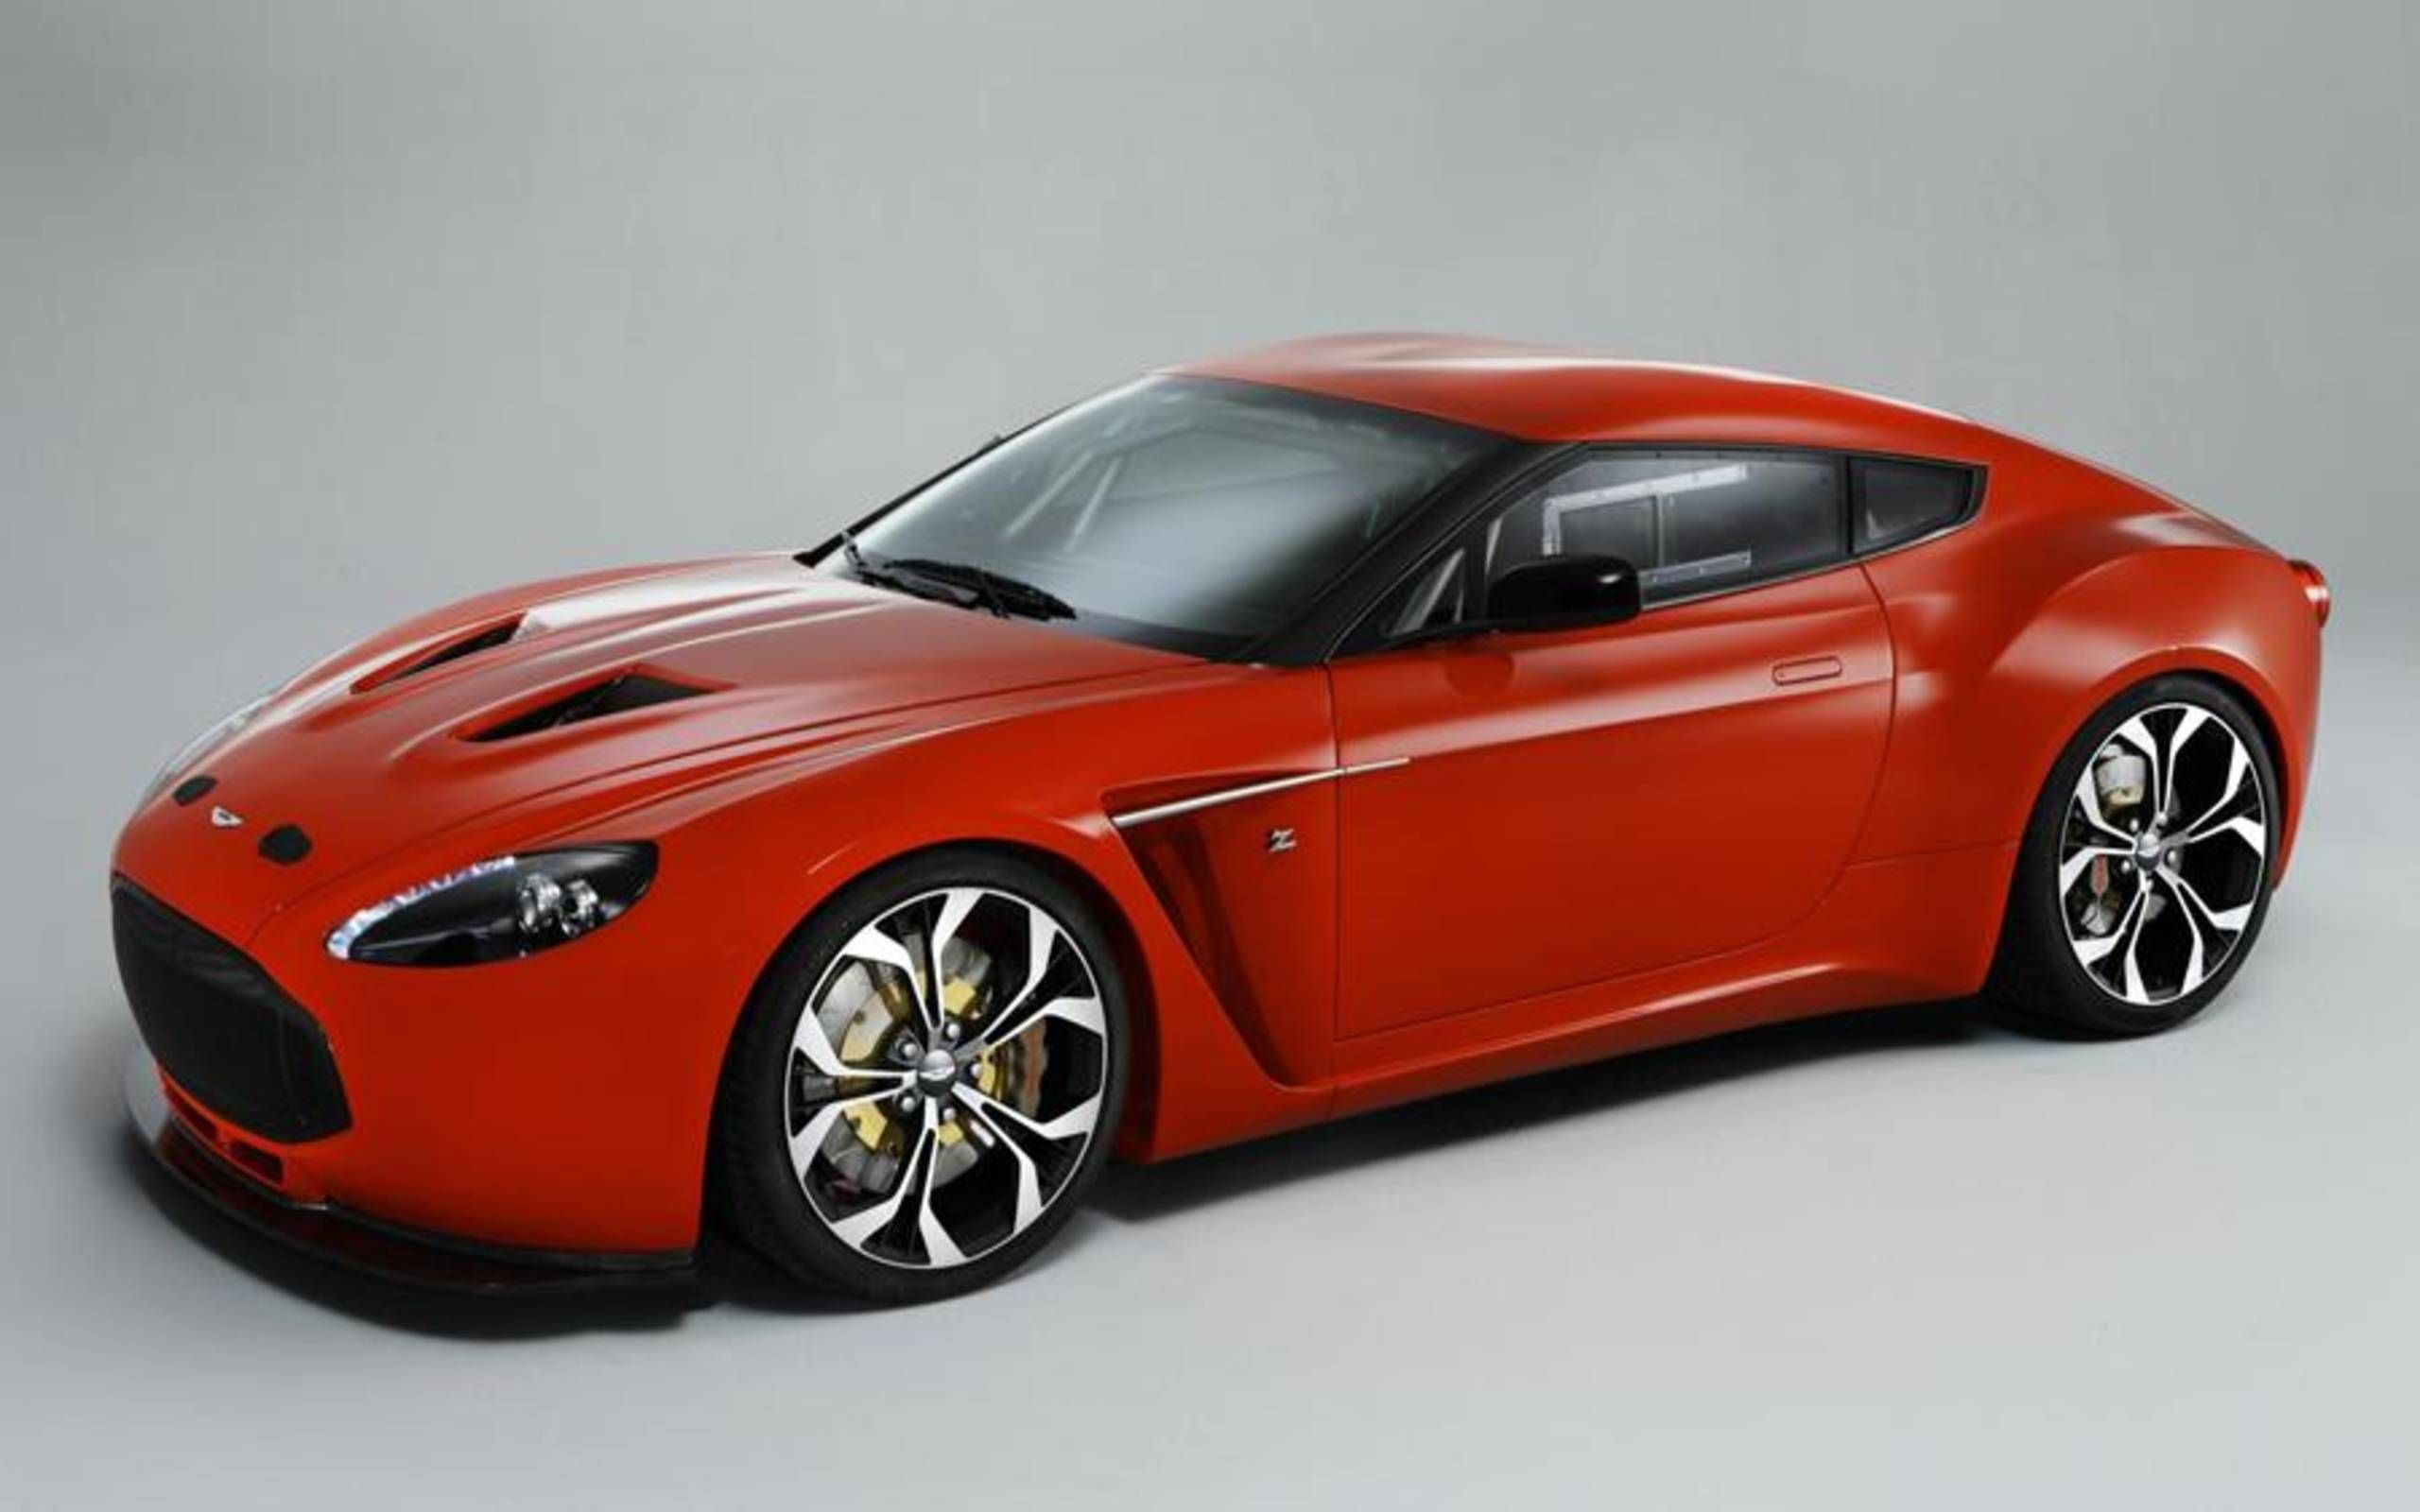 Aston Martin confirms limited production of the V12 Zagato